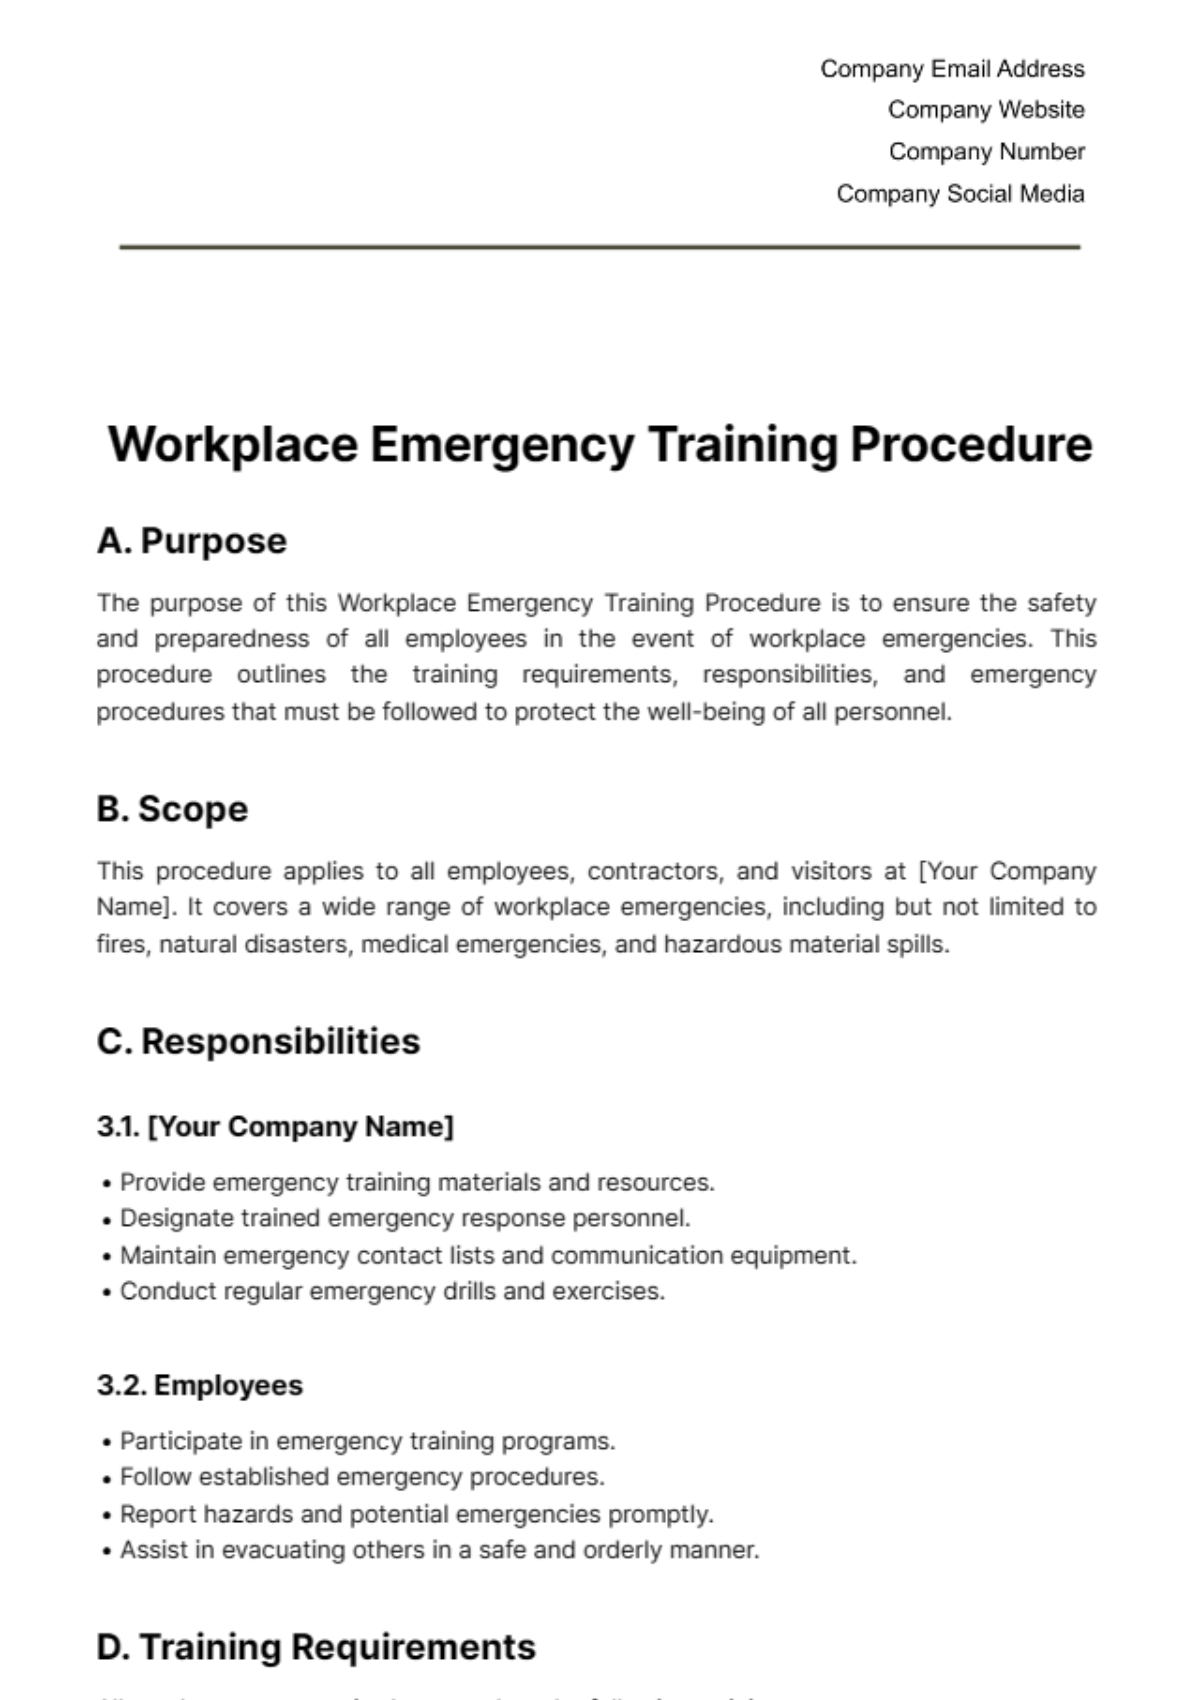 Workplace Emergency Training Procedure Template